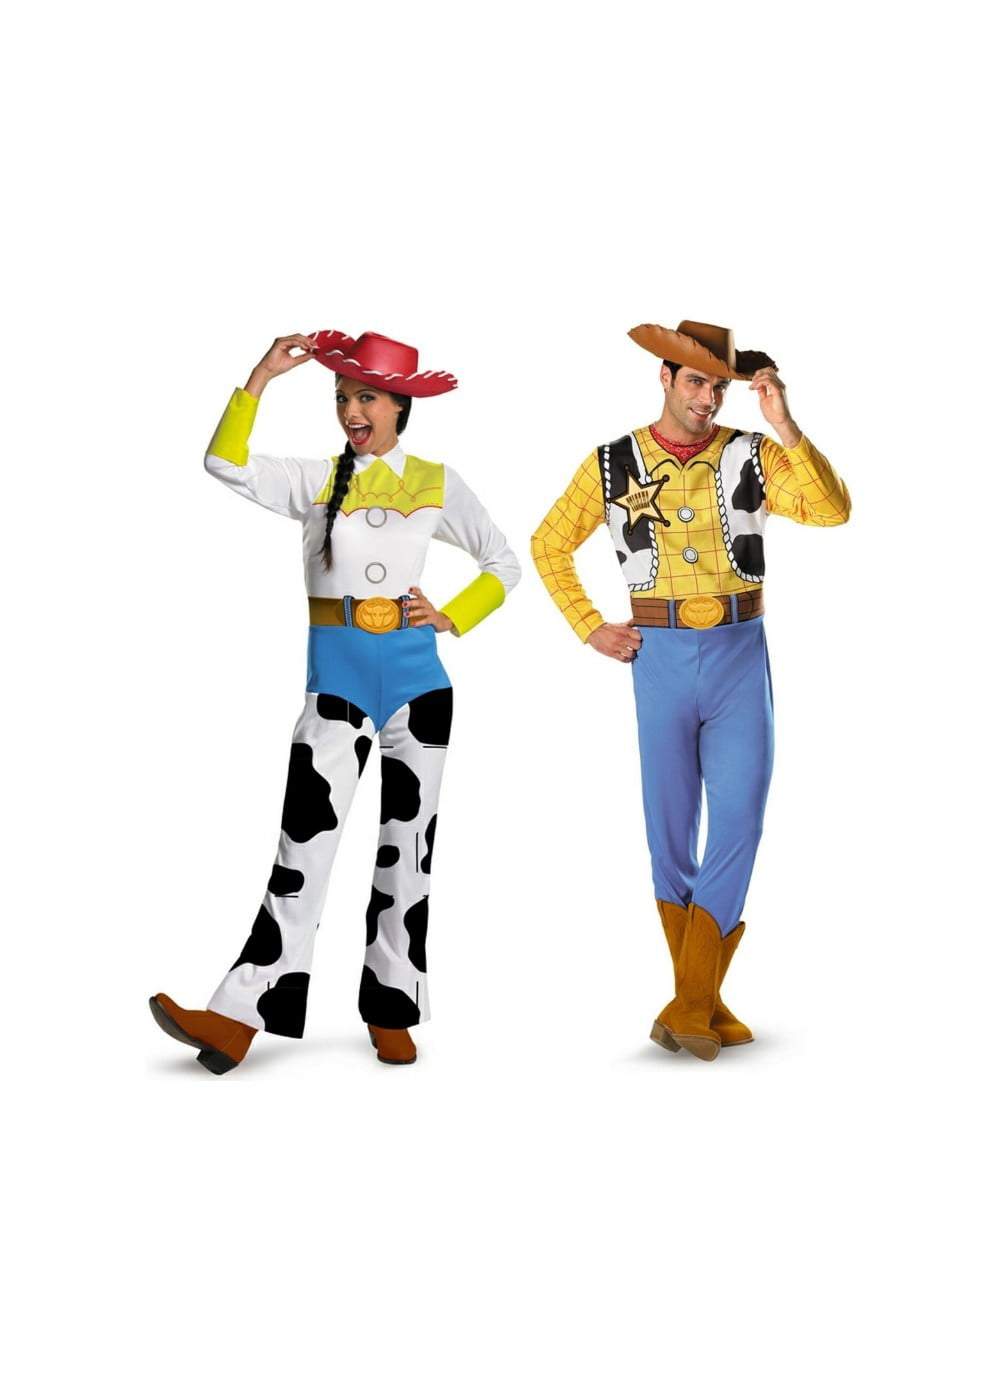 Costume Toy Story Pet Costume, Buzz Lightyear Amazon.com : Wood Dog Costume -...